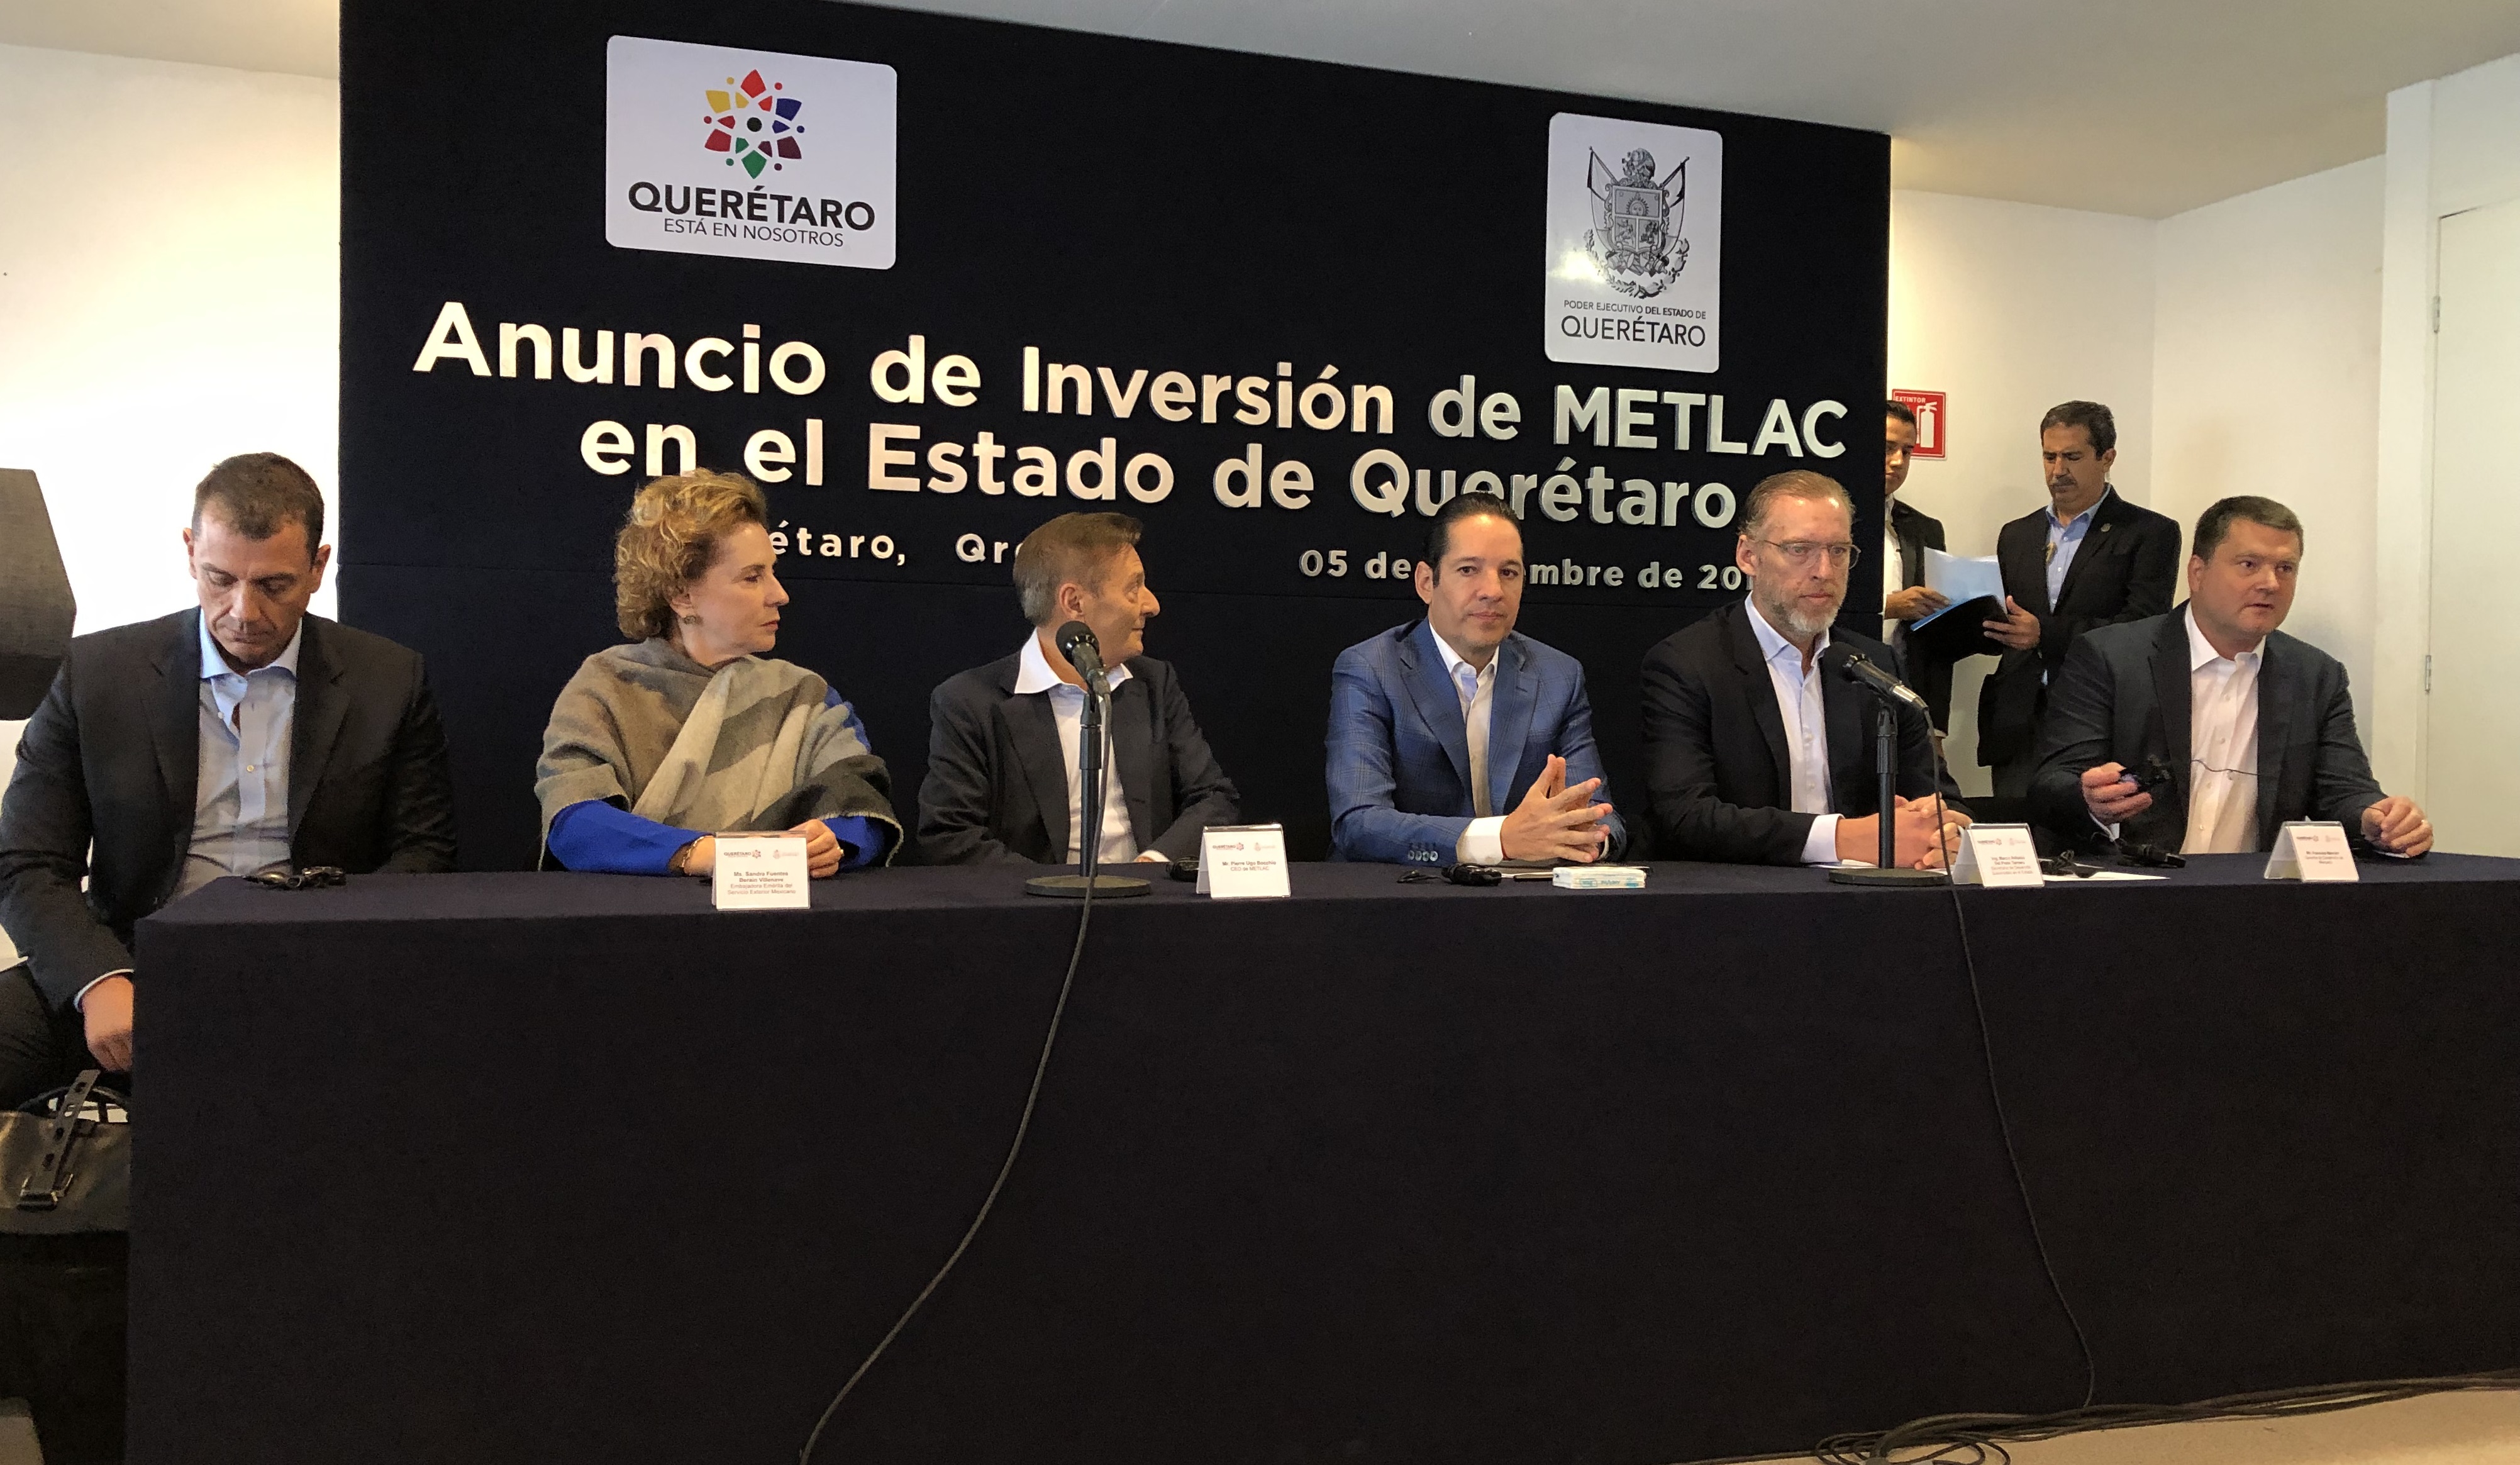  Anuncian inversión de empresa italiana por 675.5 millones de pesos en Querétaro